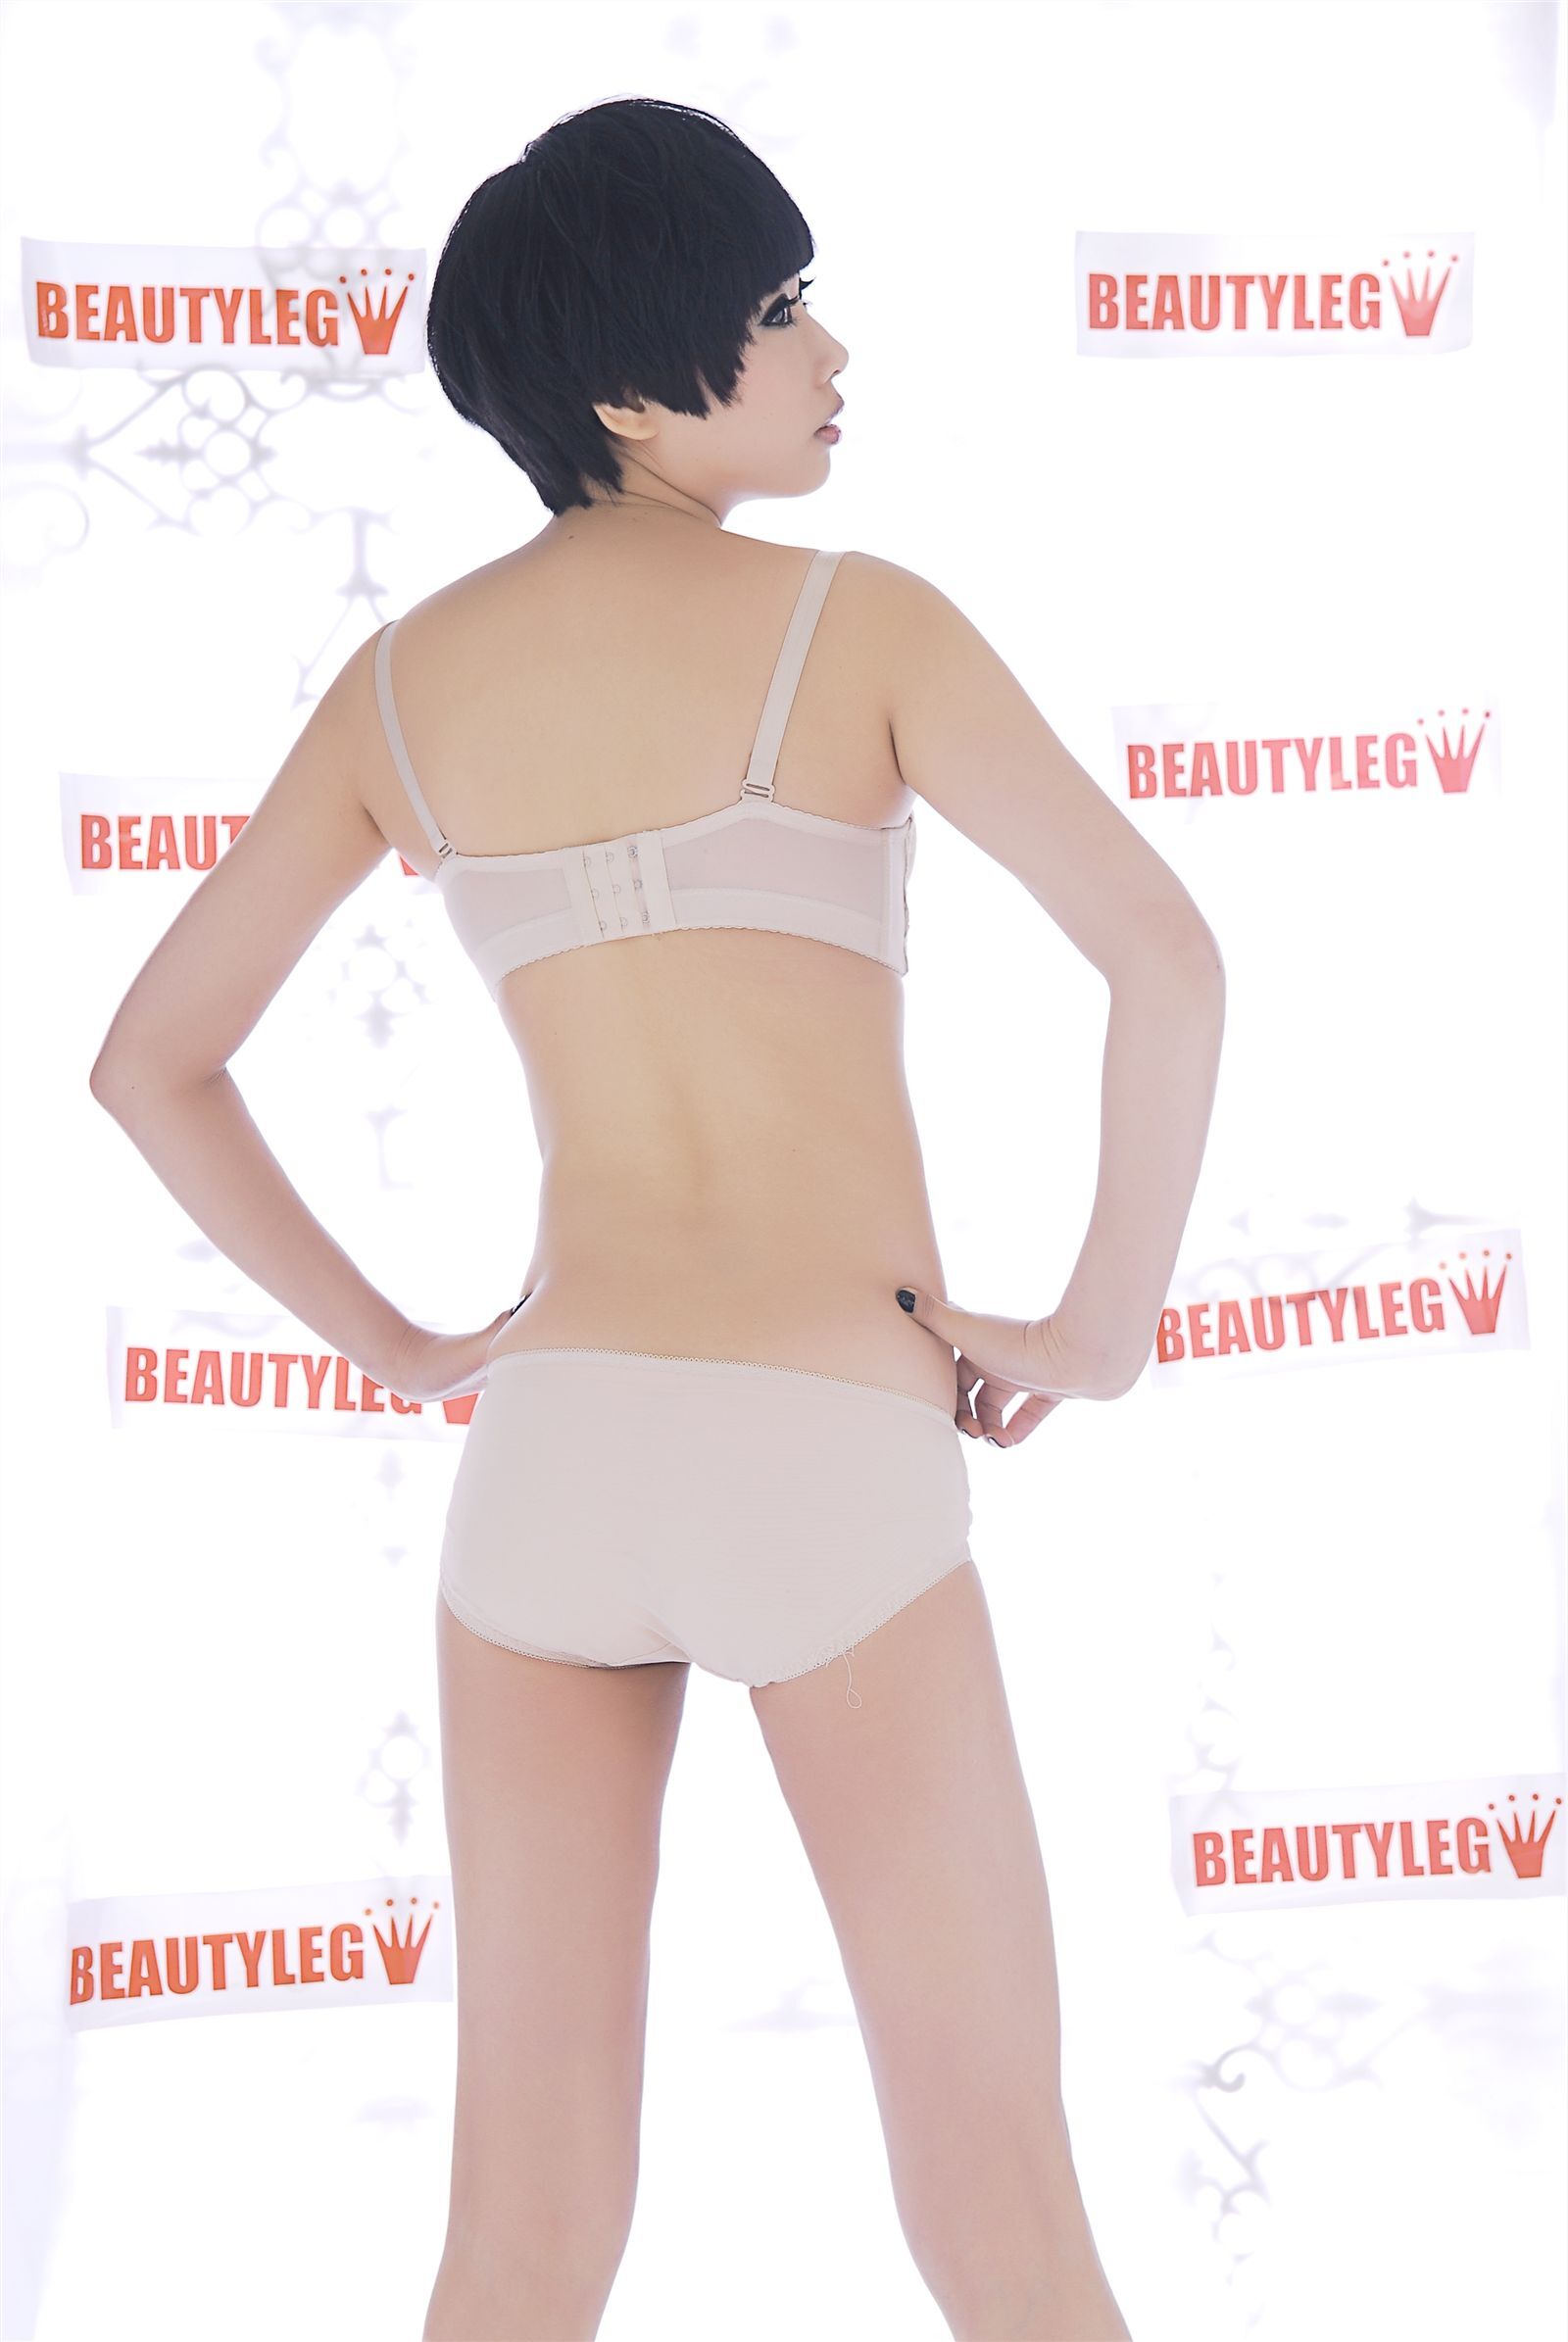 BeautyLeg underwear photo model set (1) high definition model underwear photos